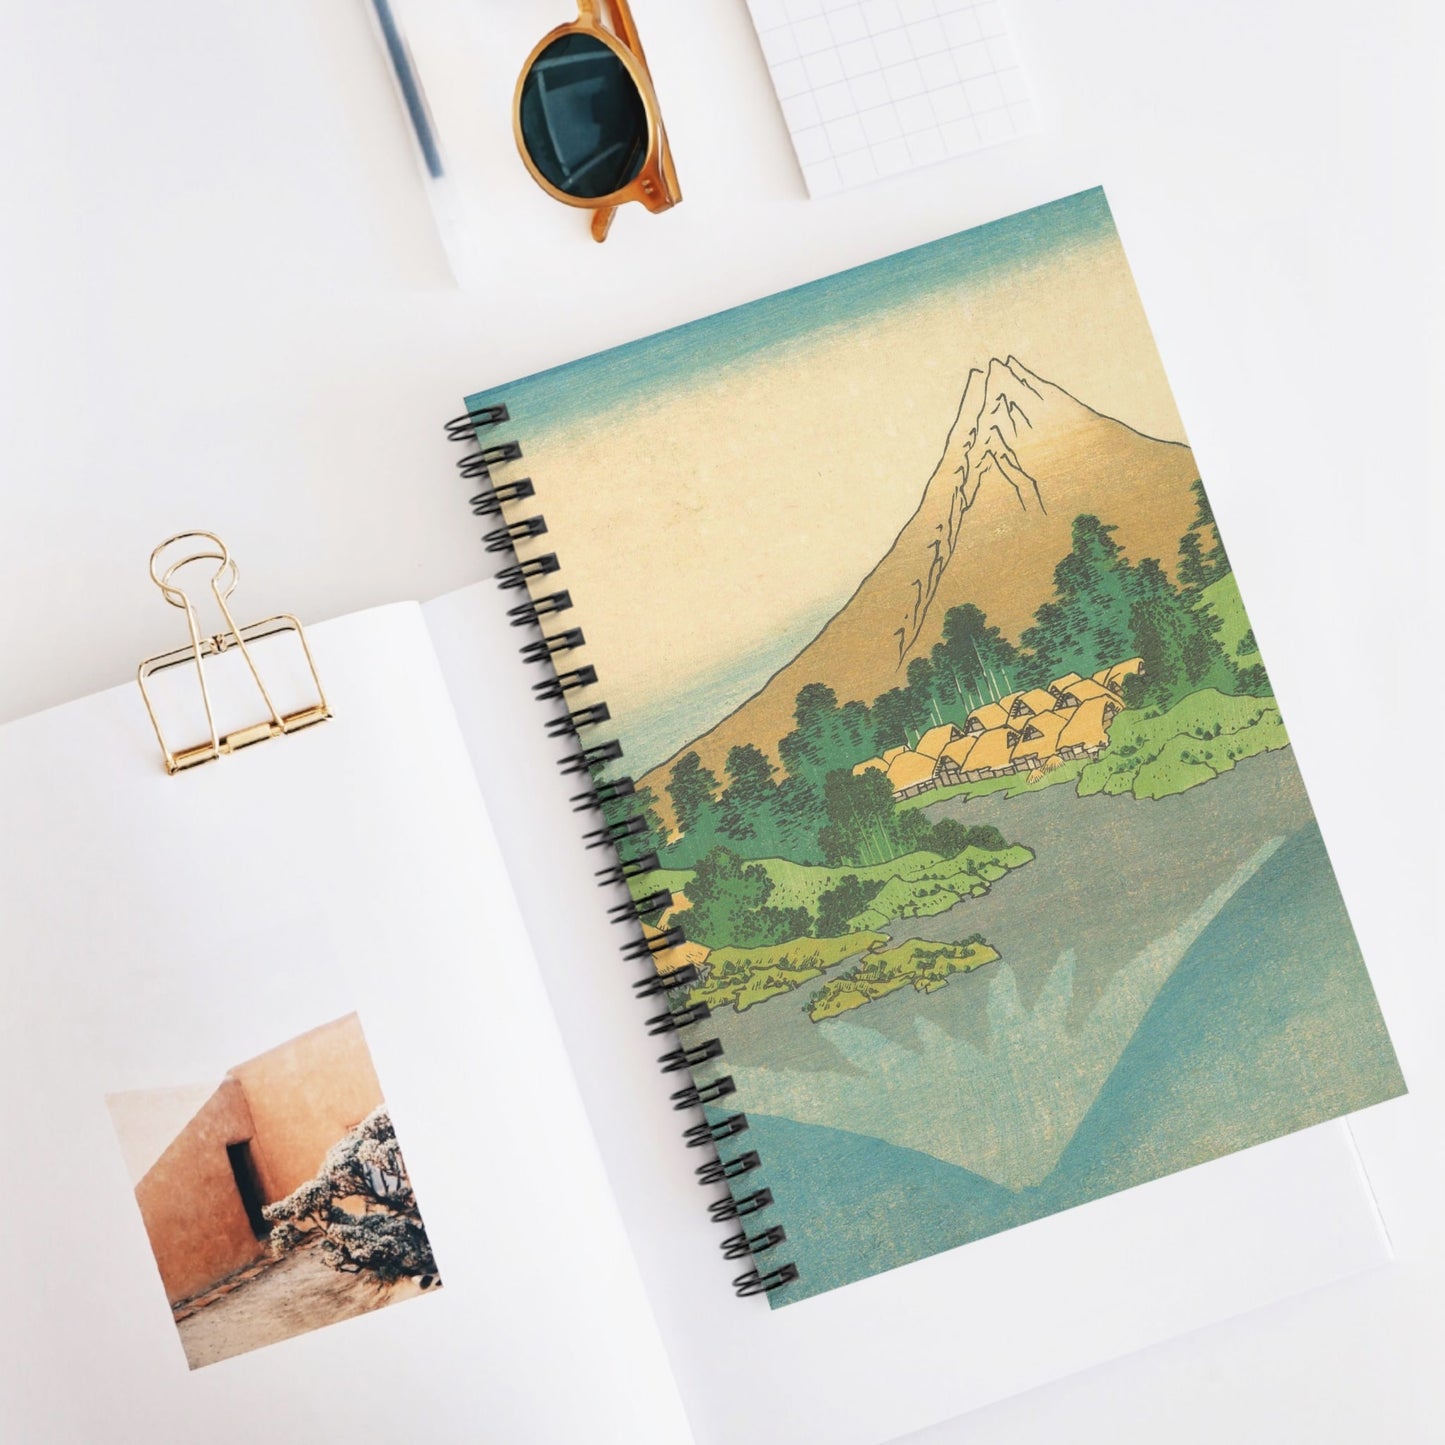 Japanese Mountain Spiral Notebook Displayed on Desk